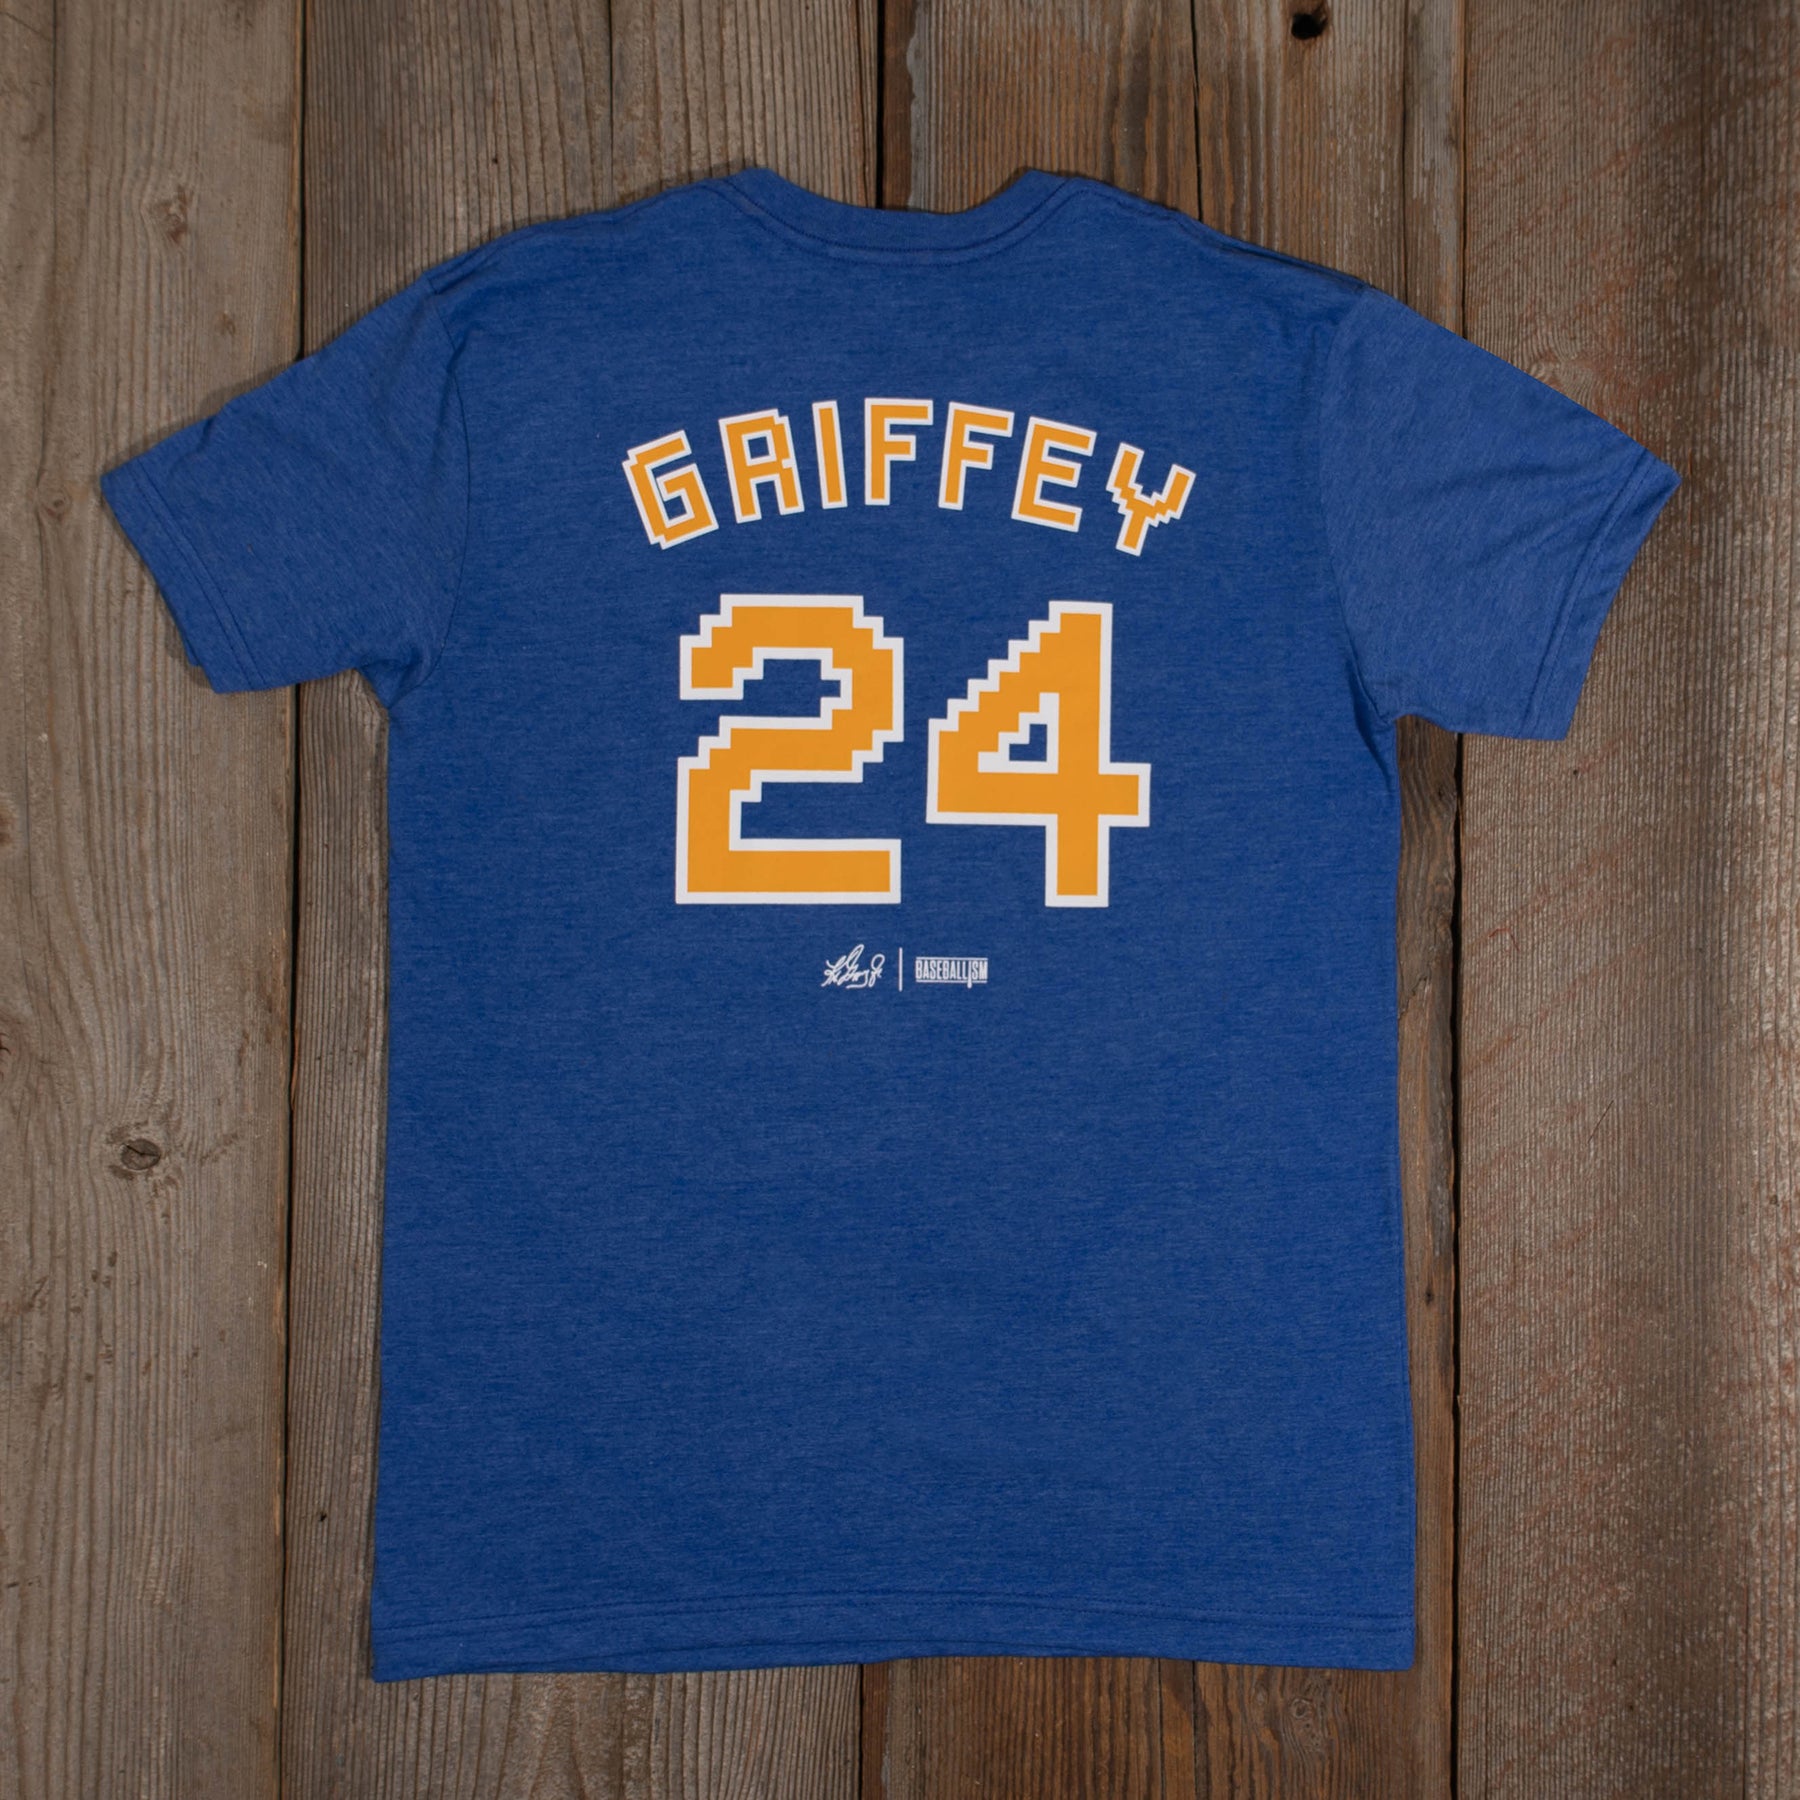 Baseball - Major League Swing Man - Ken Griffey Jr. Essential T-Shirt for  Sale by DaSportsMachine